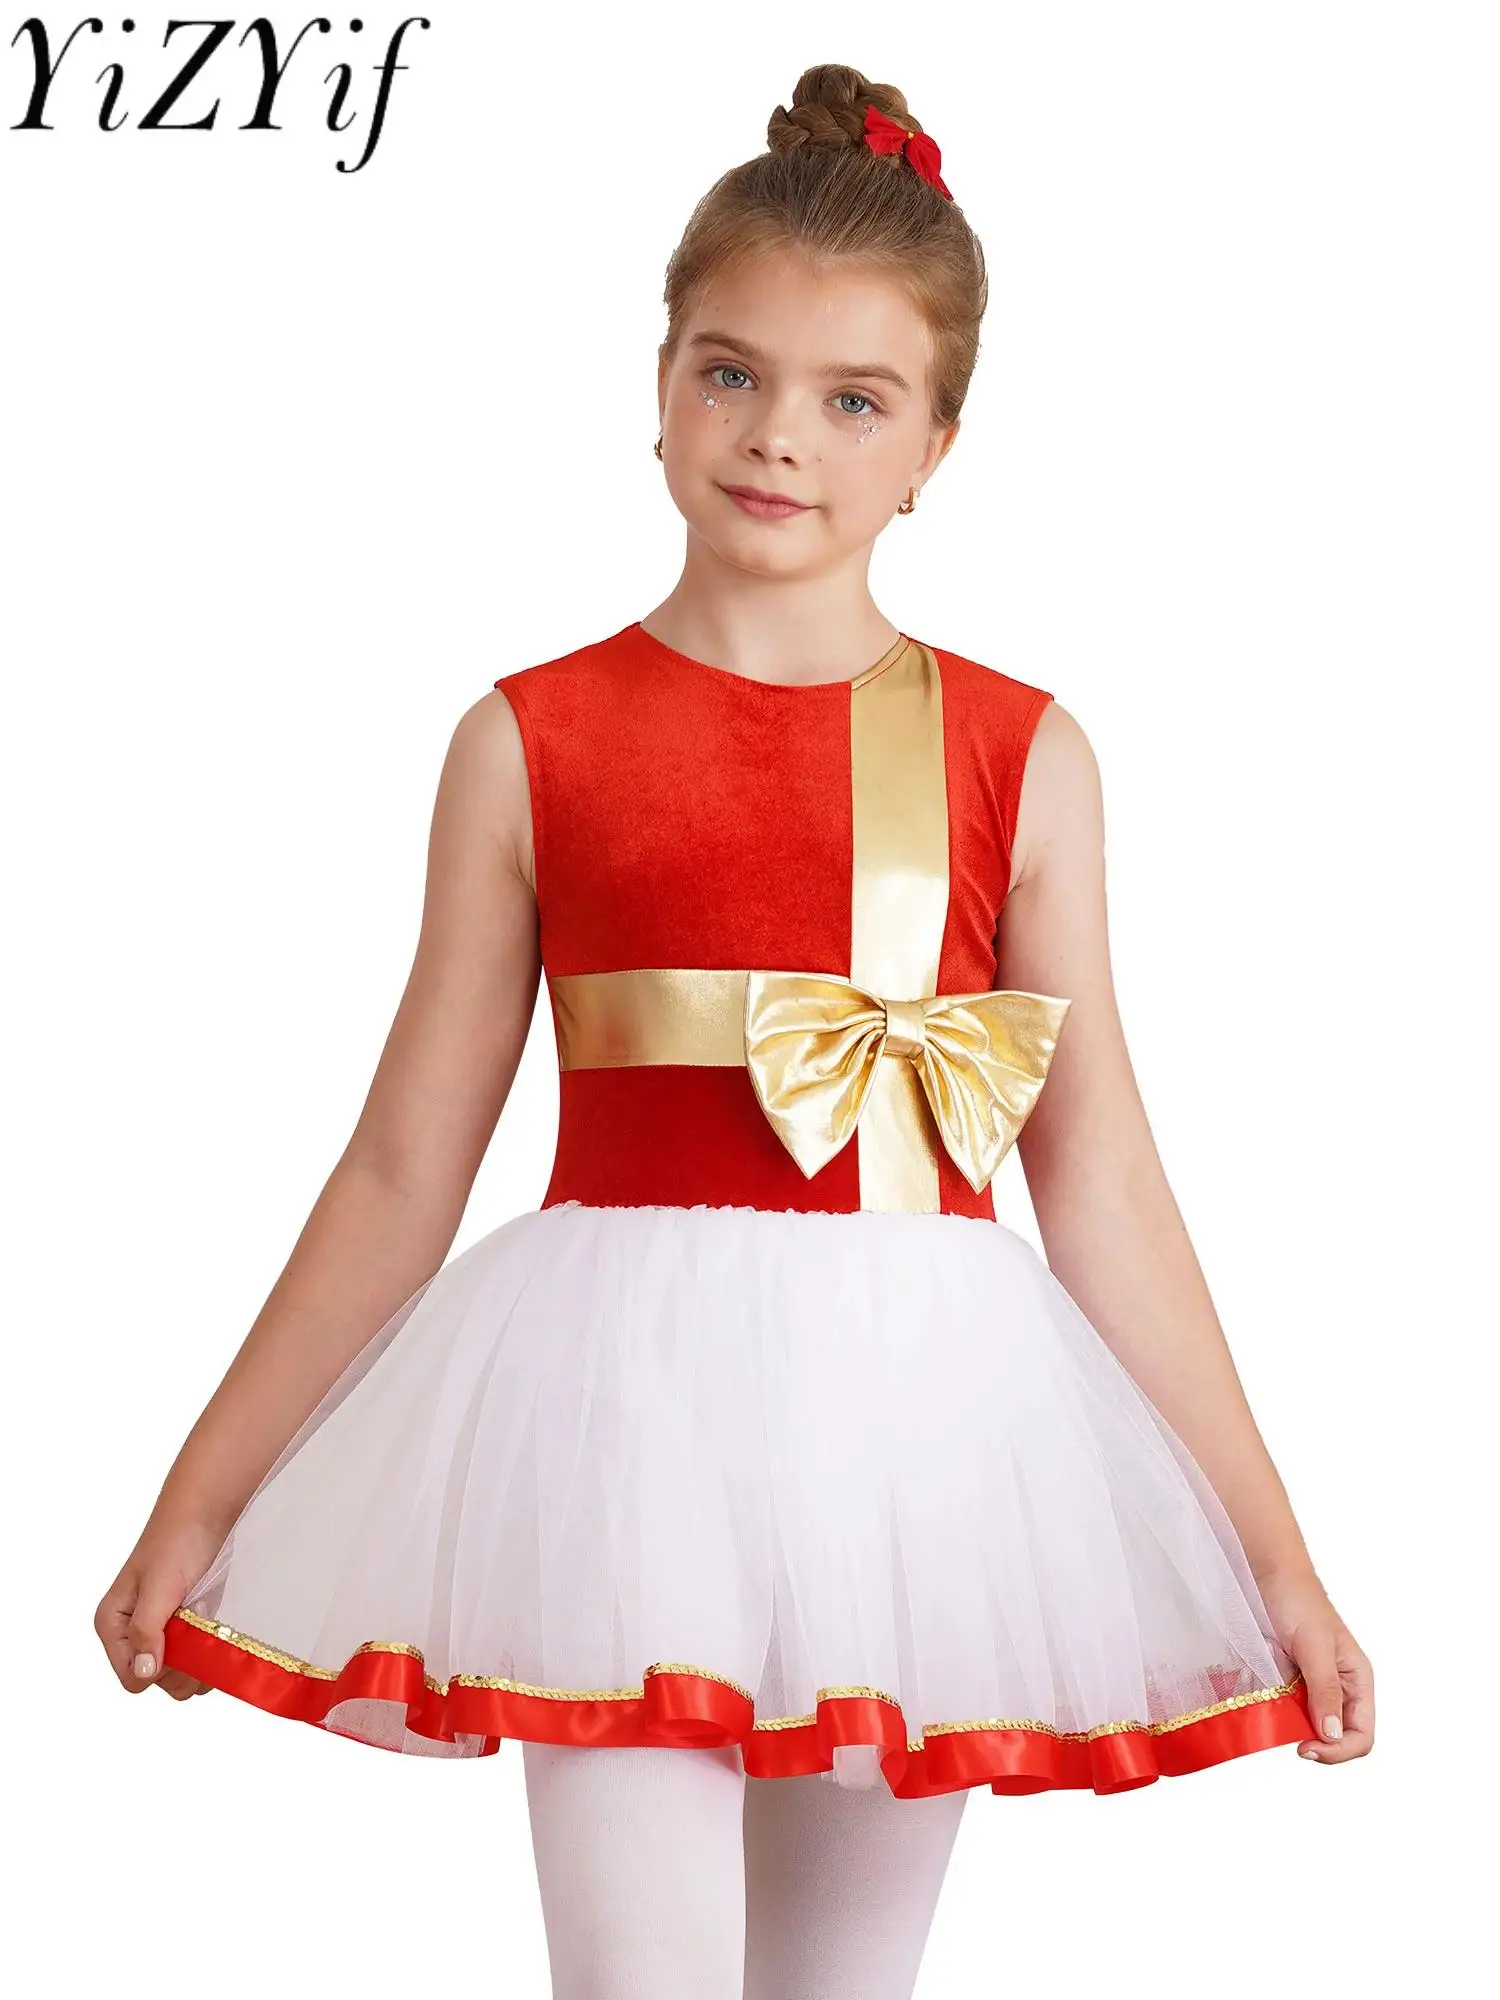 

Kid Girls Candy Cane Christmas Costume Pageant Party Plush Bowknot Ballet Dance Figure Ice Skating Tutu Dress Leotard Dancewear